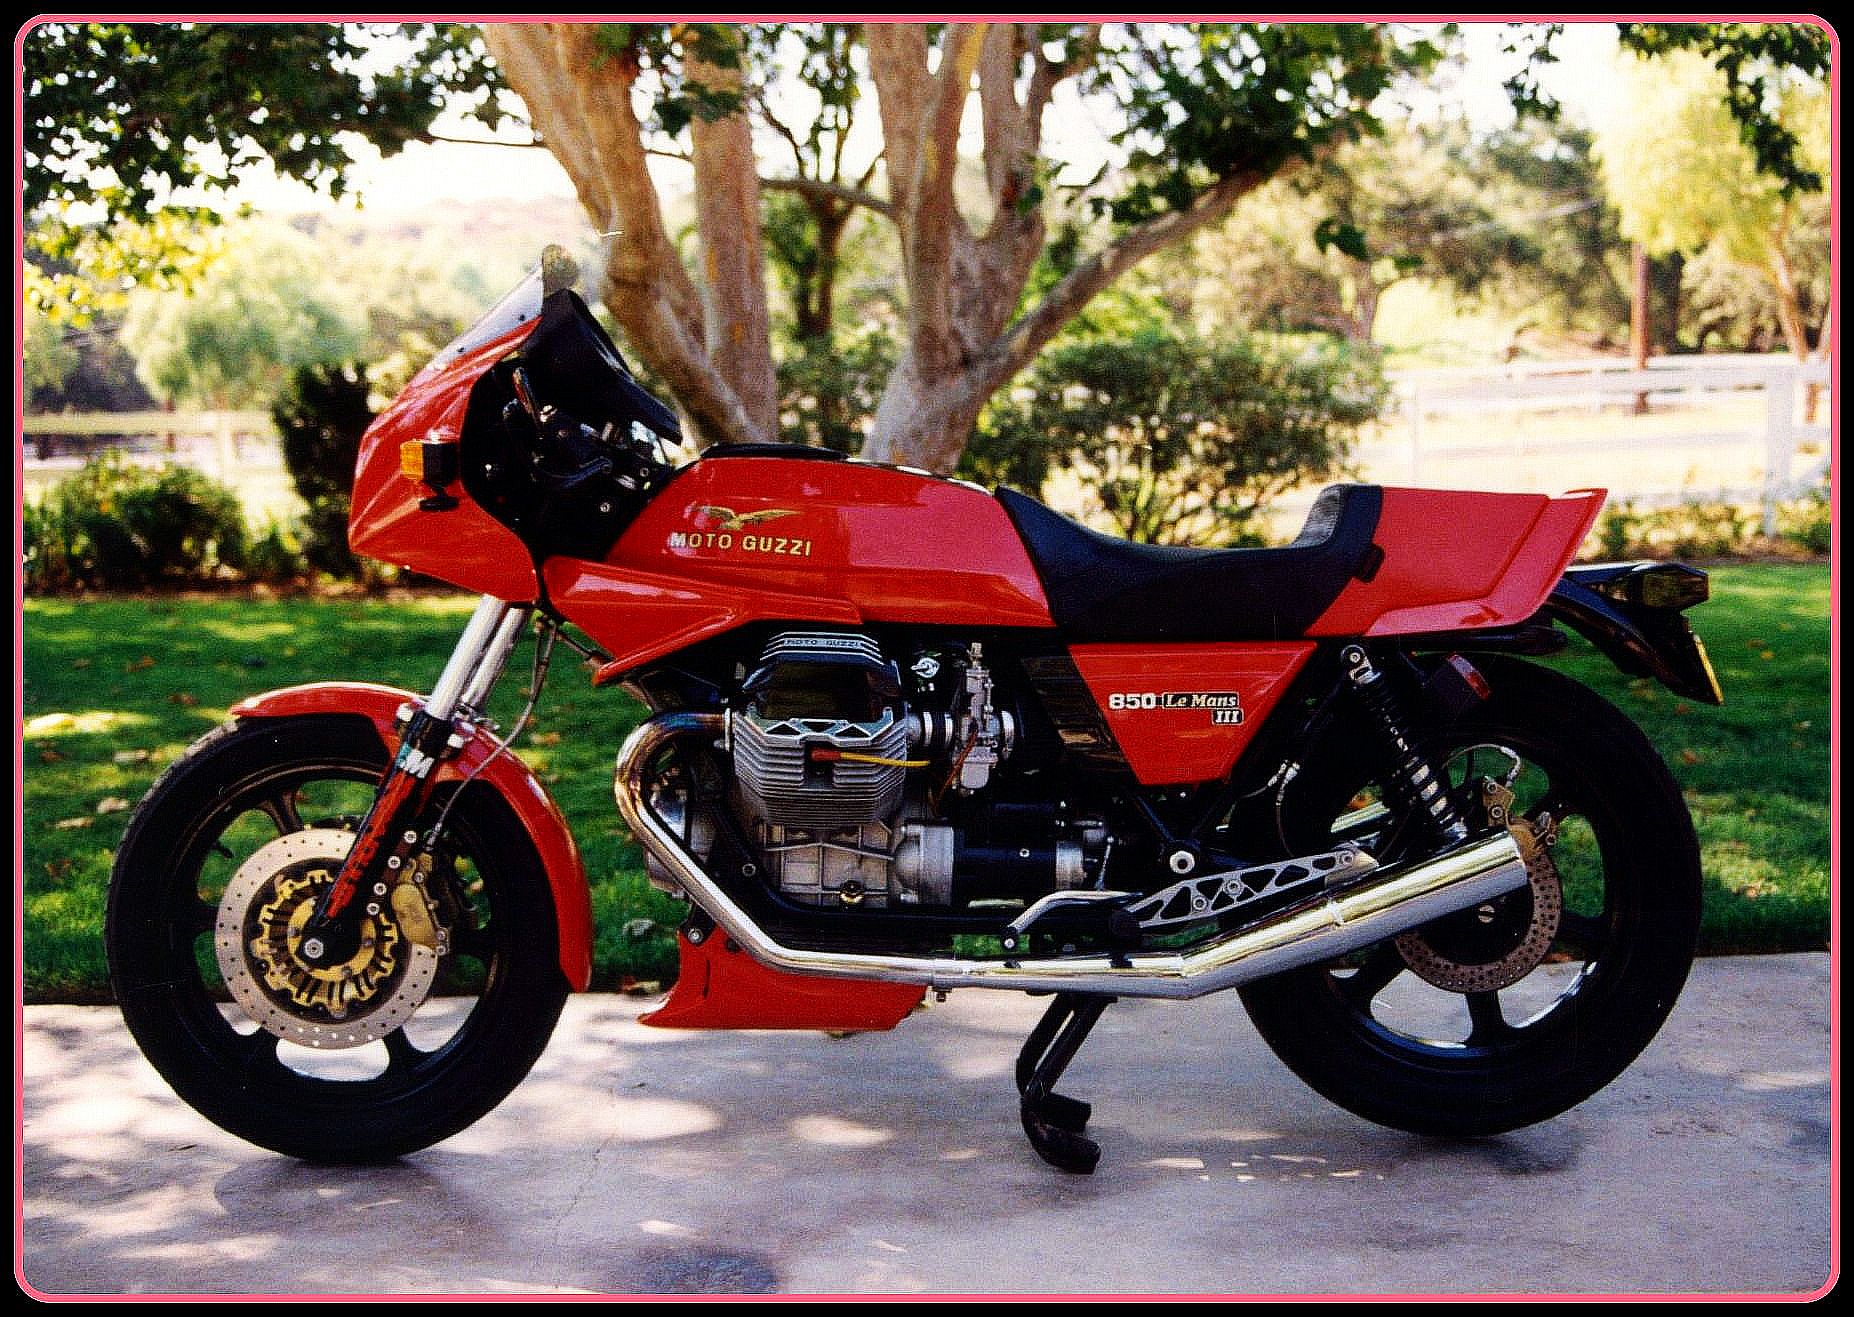 moto-guzzi-850-le-mans-iii-1983-7.jpg